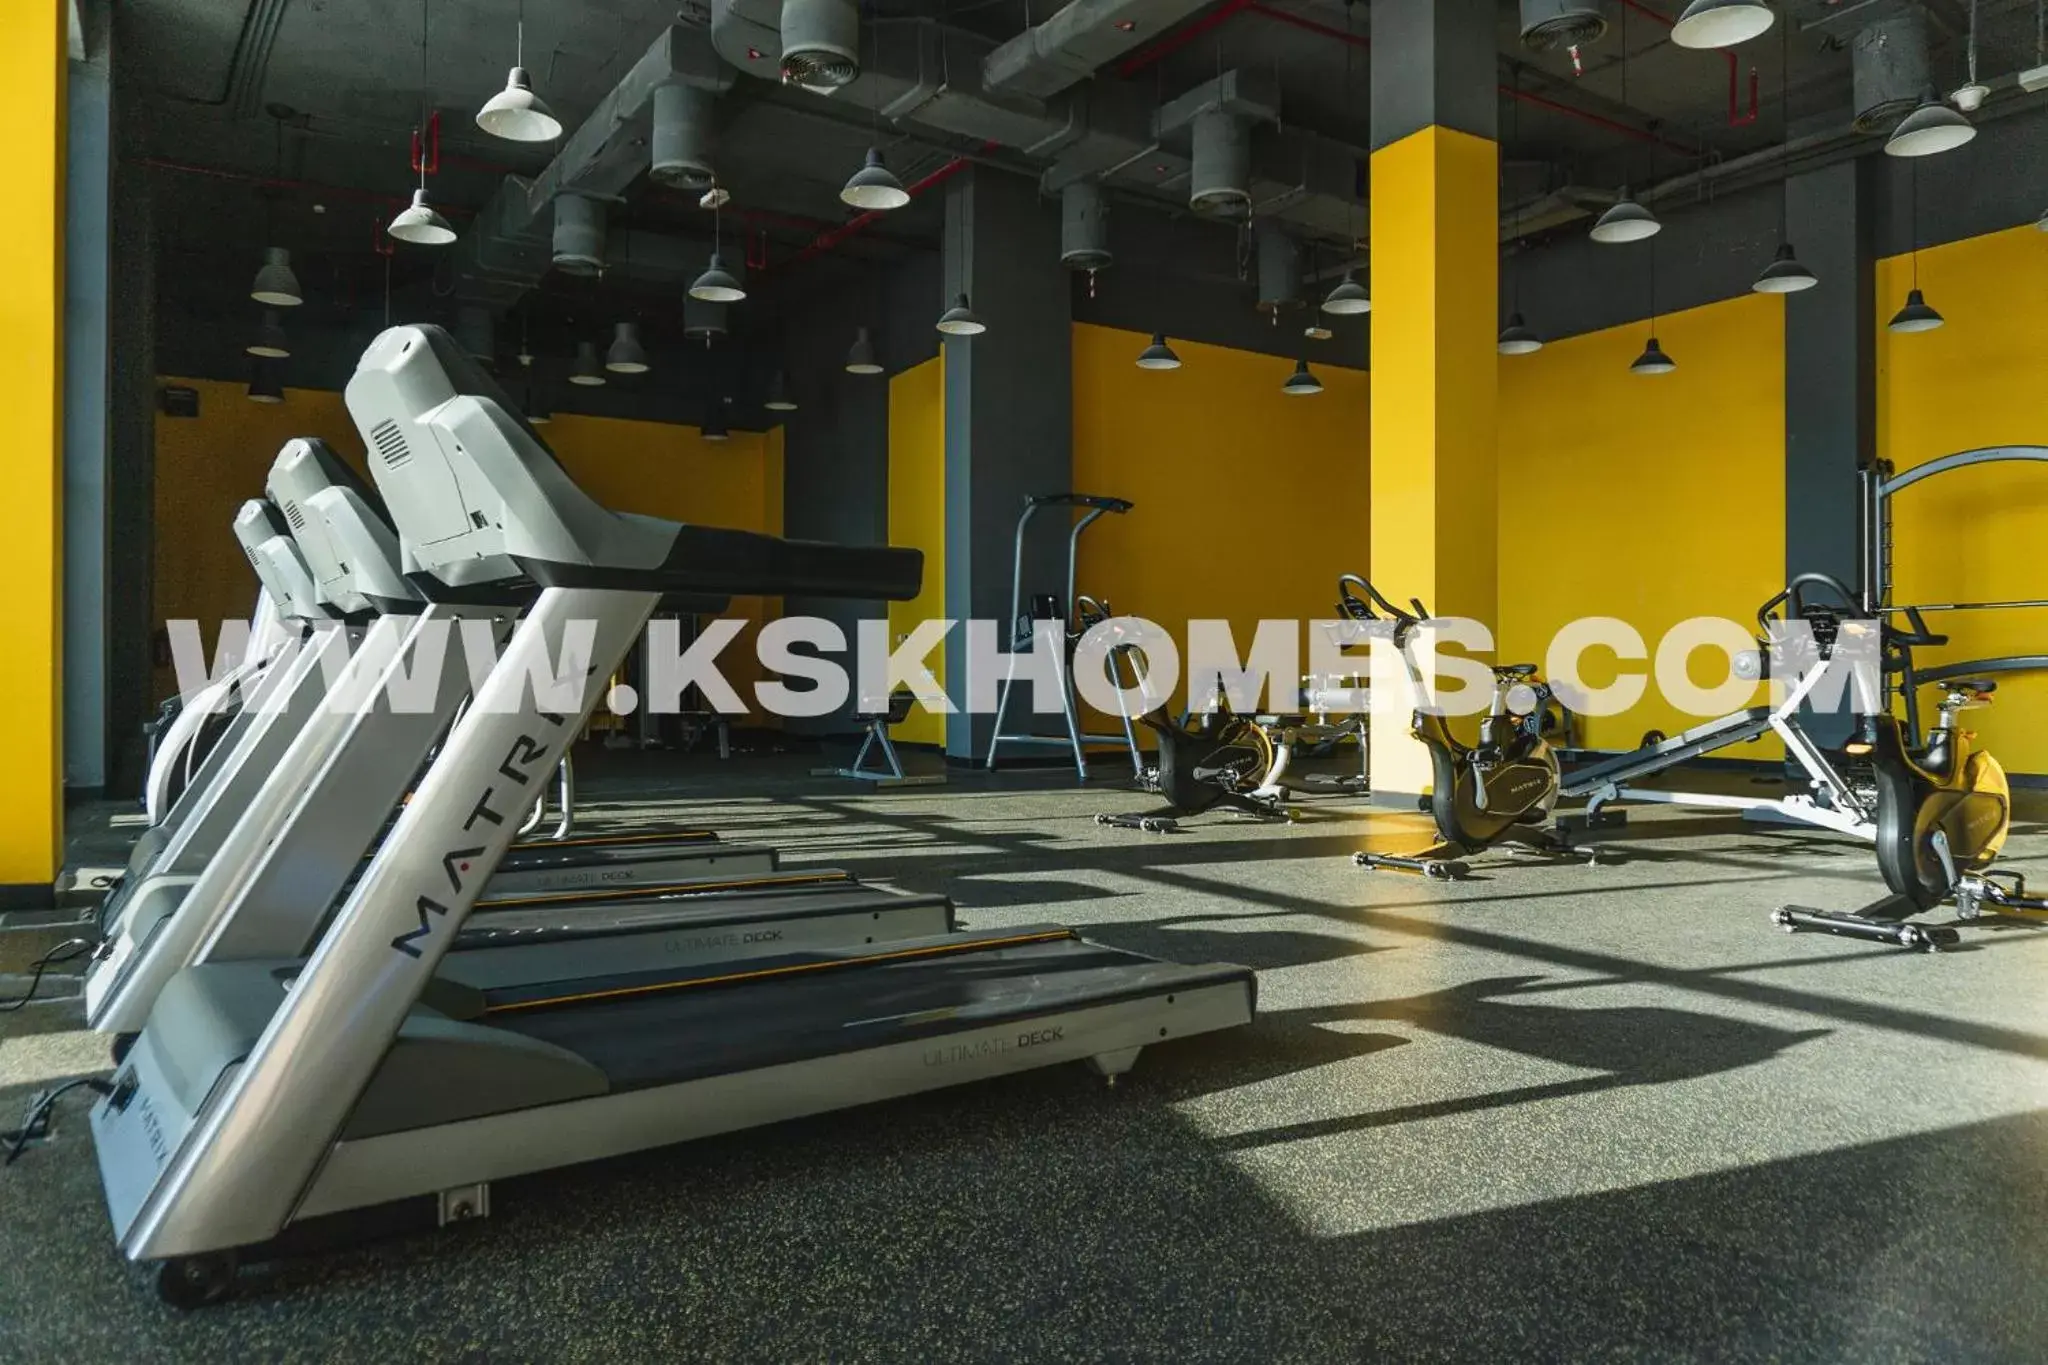 Fitness centre/facilities in KSK Homes Hotel Dubai Academic City